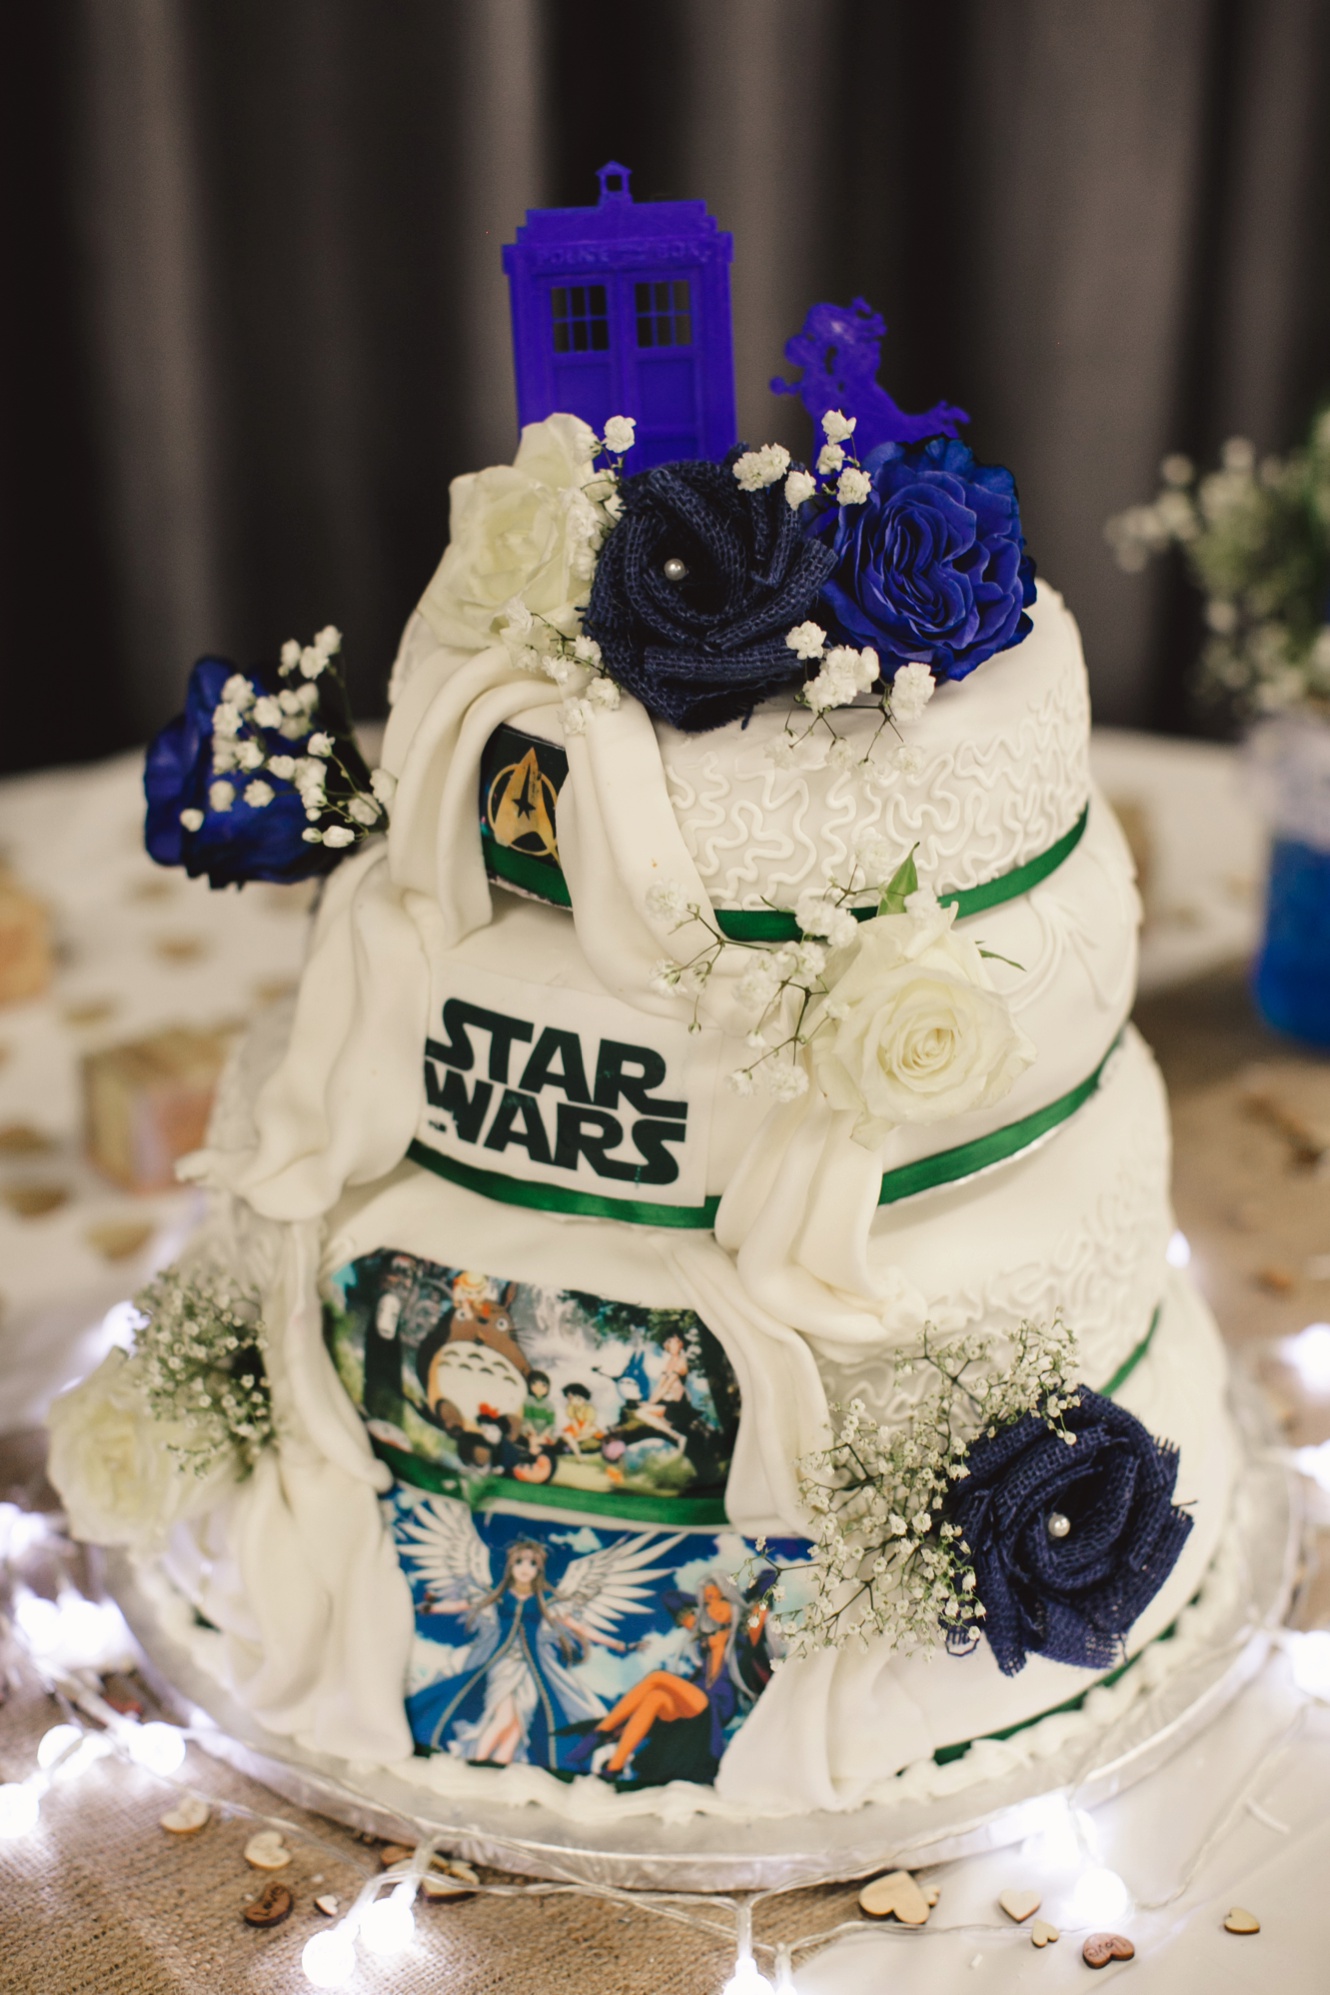 Star Wars four tiered wedding cake